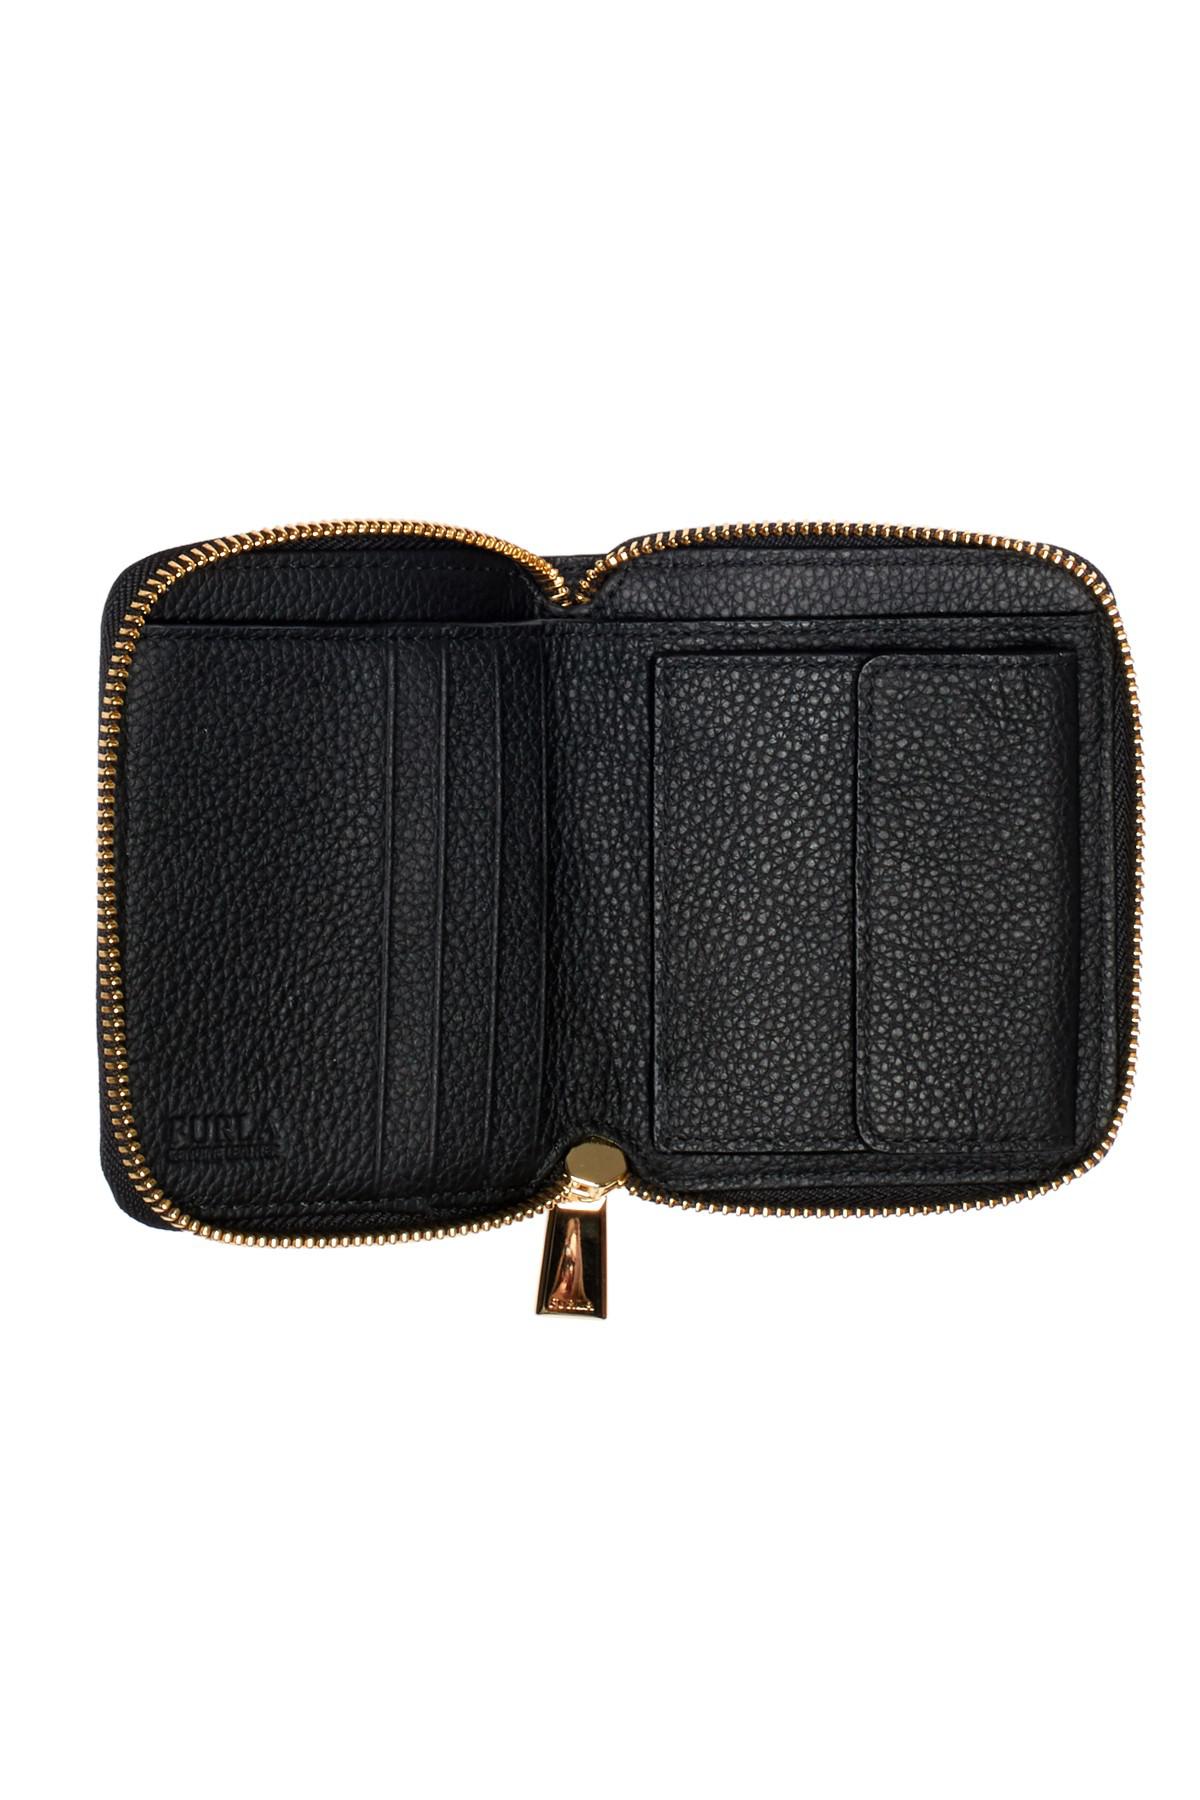 Furla Ritzy Zip Around Leather Wallet in Onyx (Black) - Lyst